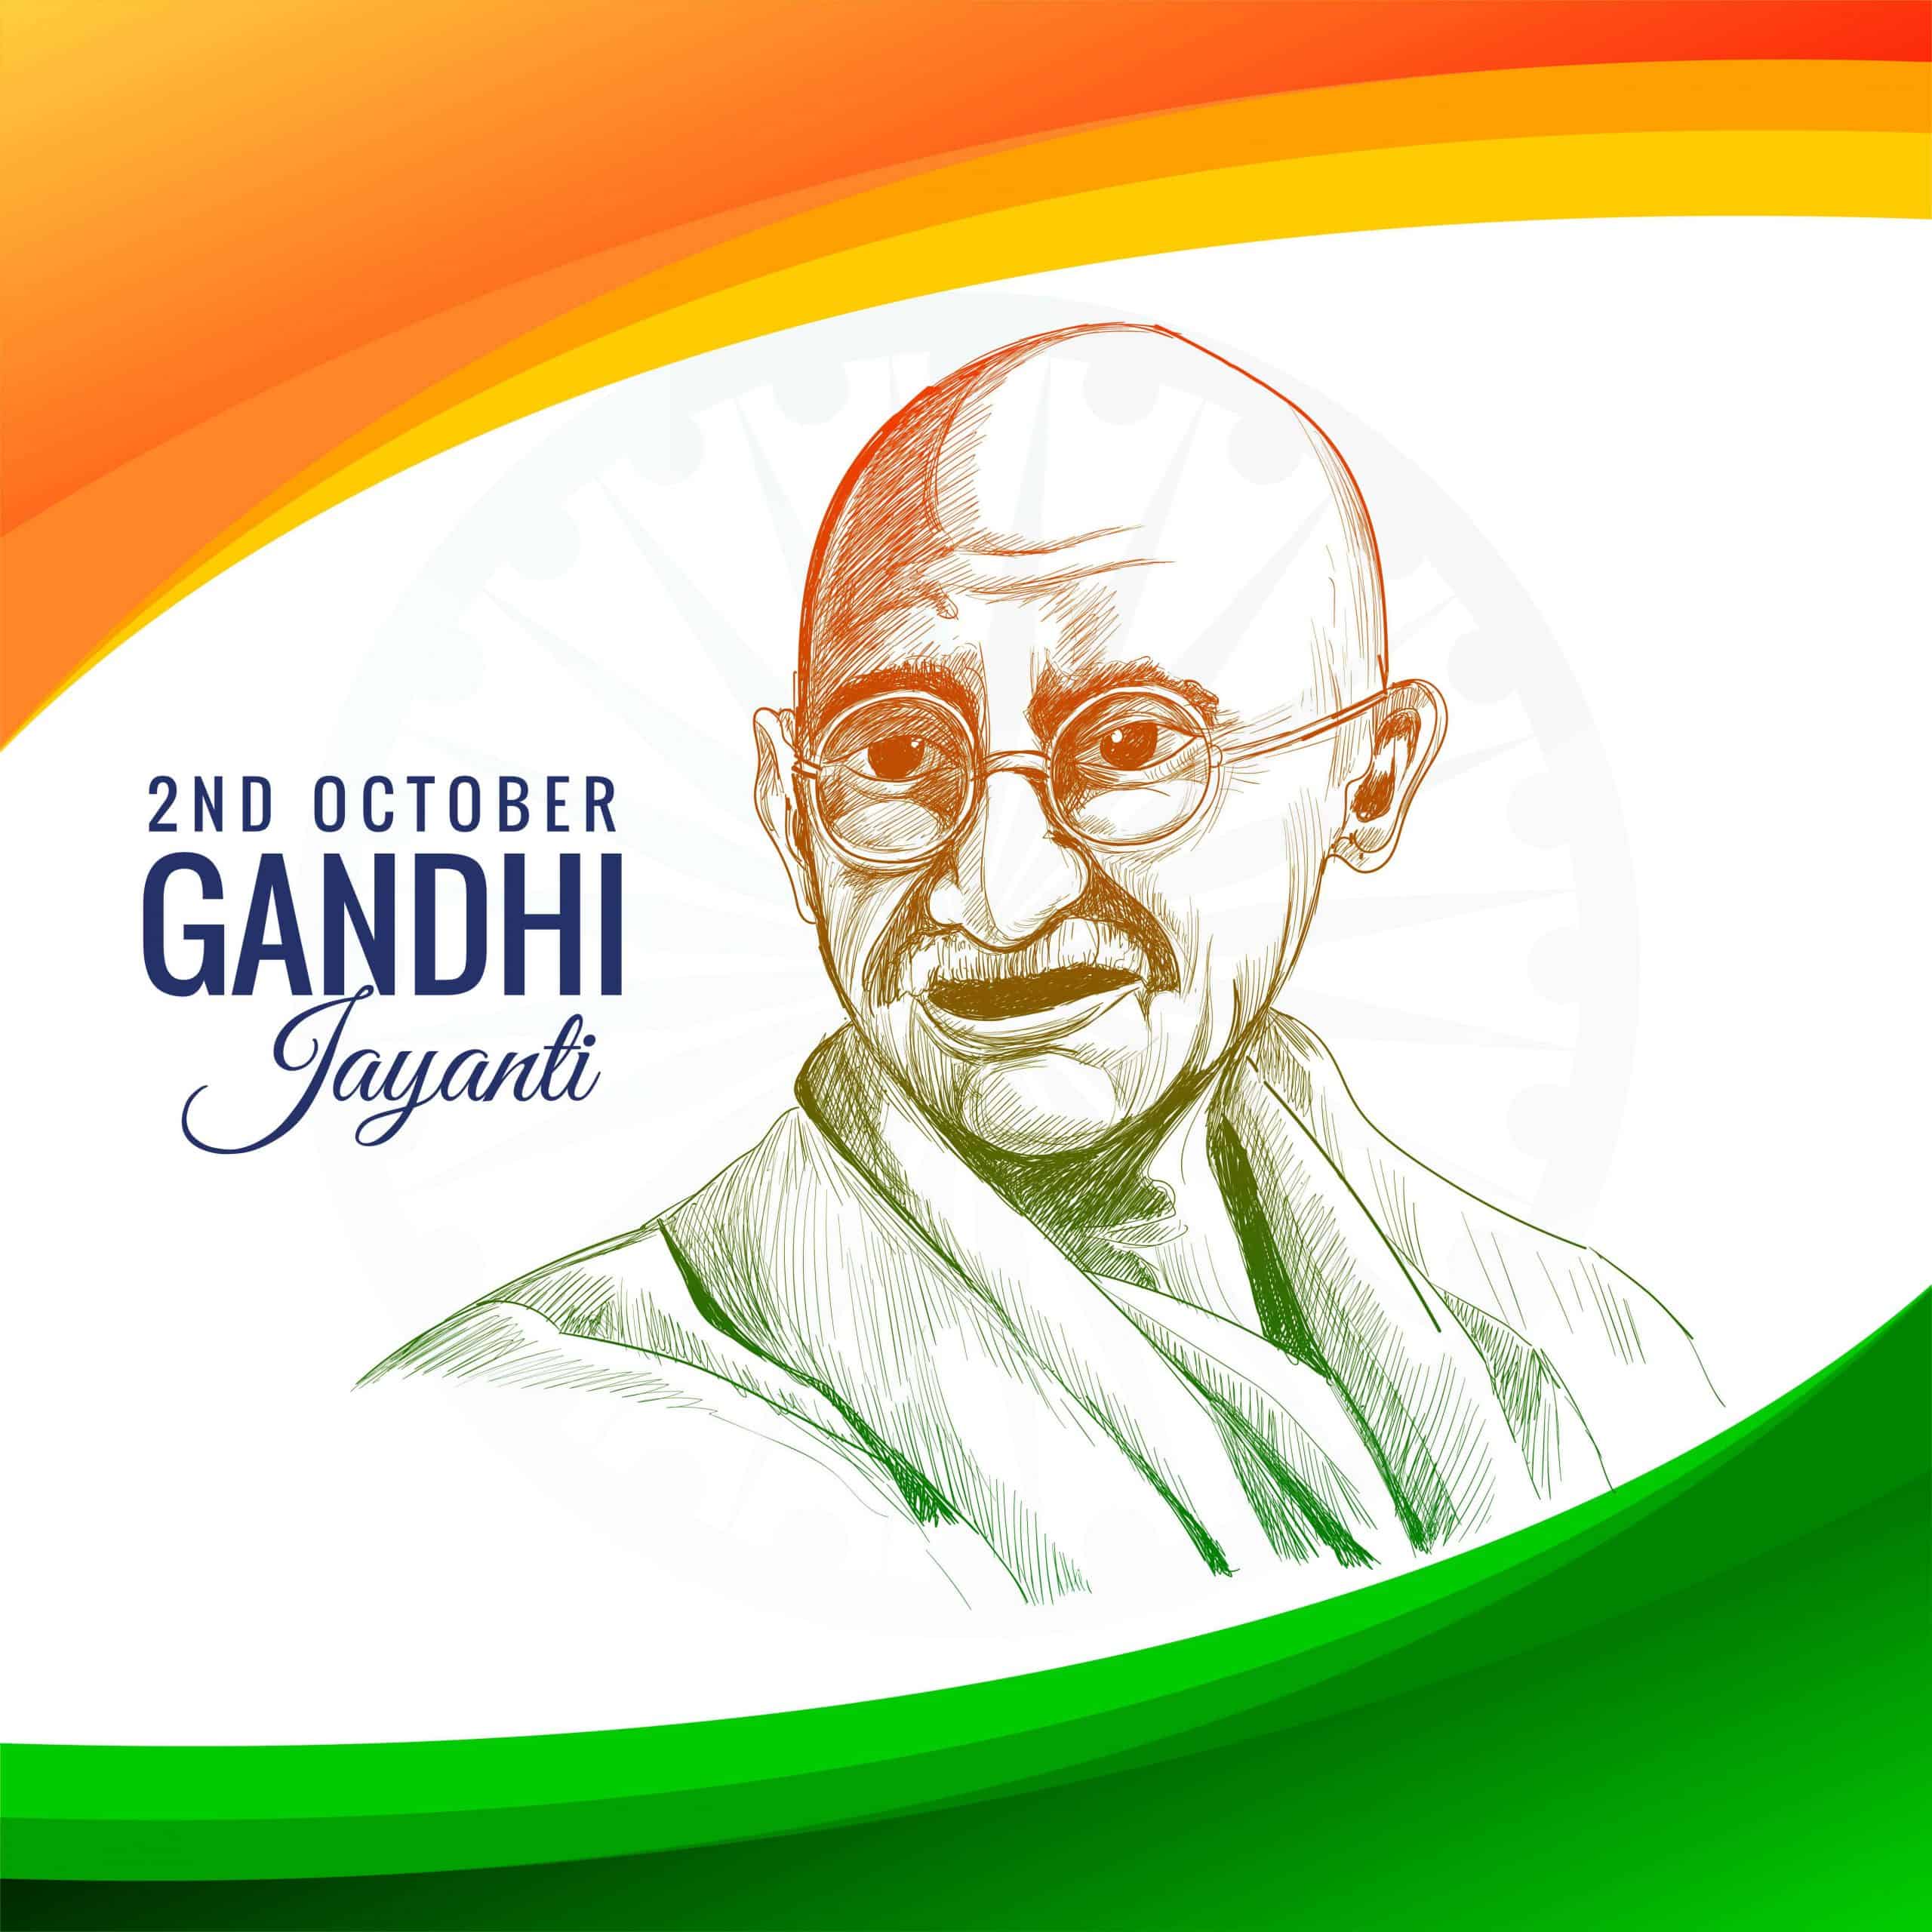 Happy Gandhi Jayanti Photos